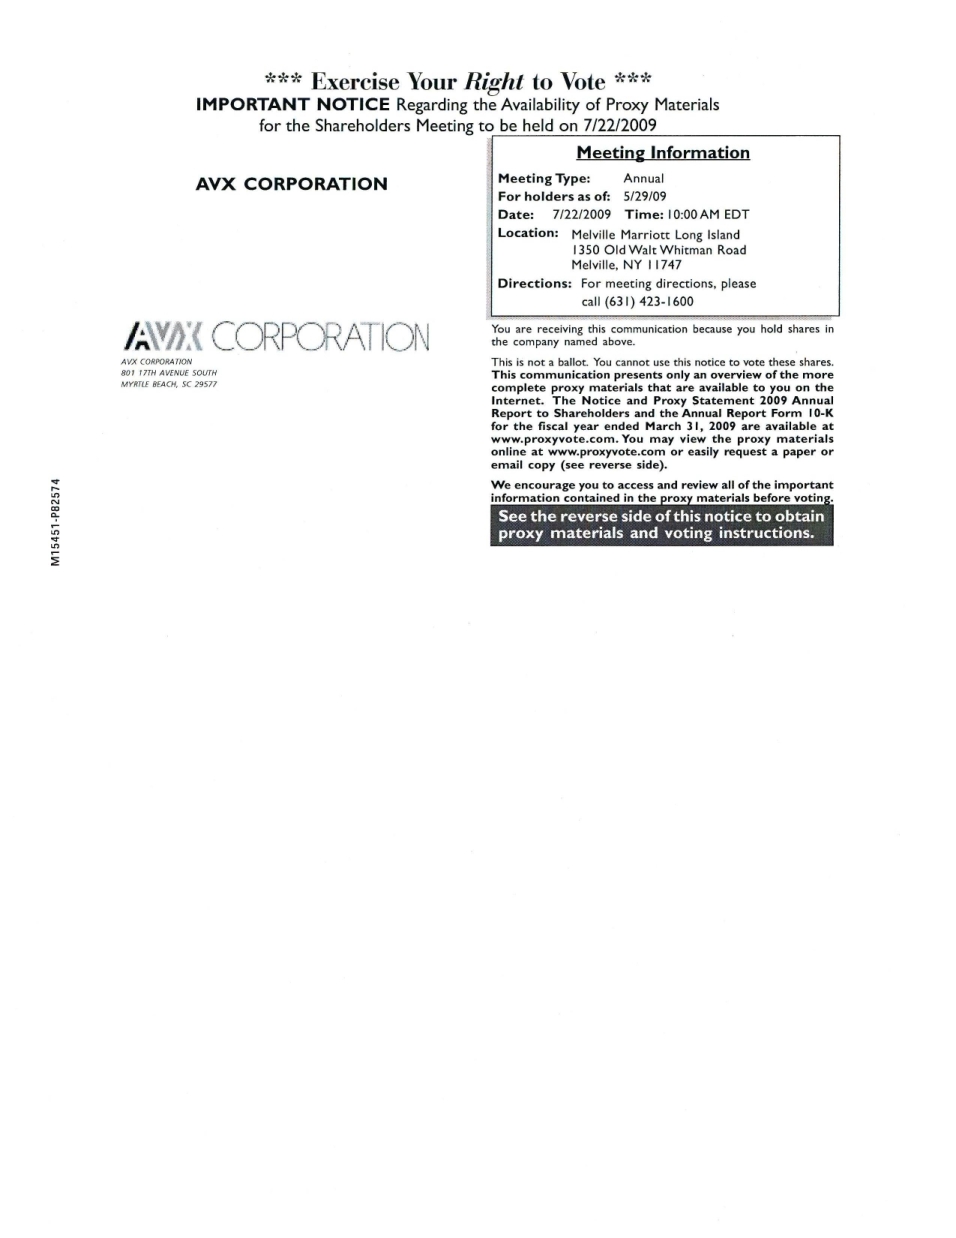 AVX Corporation Notice Page 1